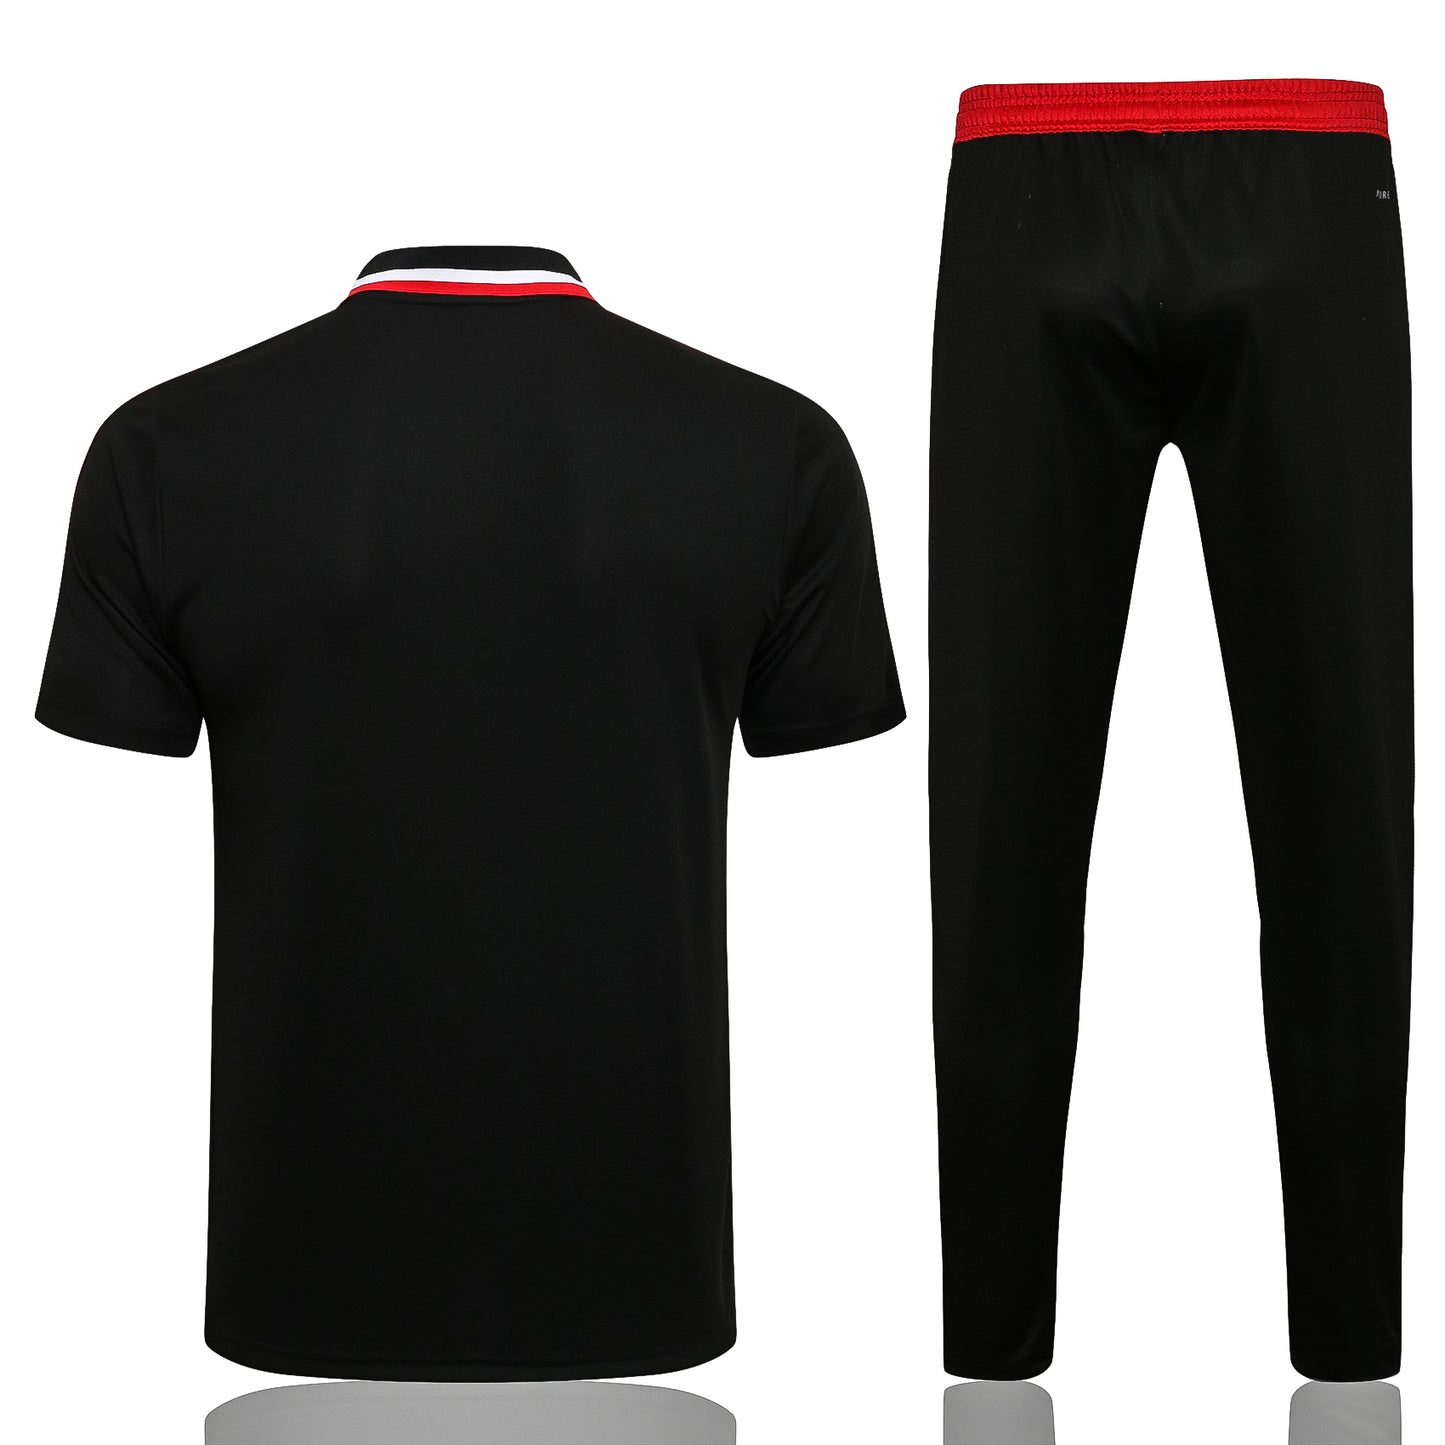 adidas Manchester (Polo Shirt & Pant) Training Kit